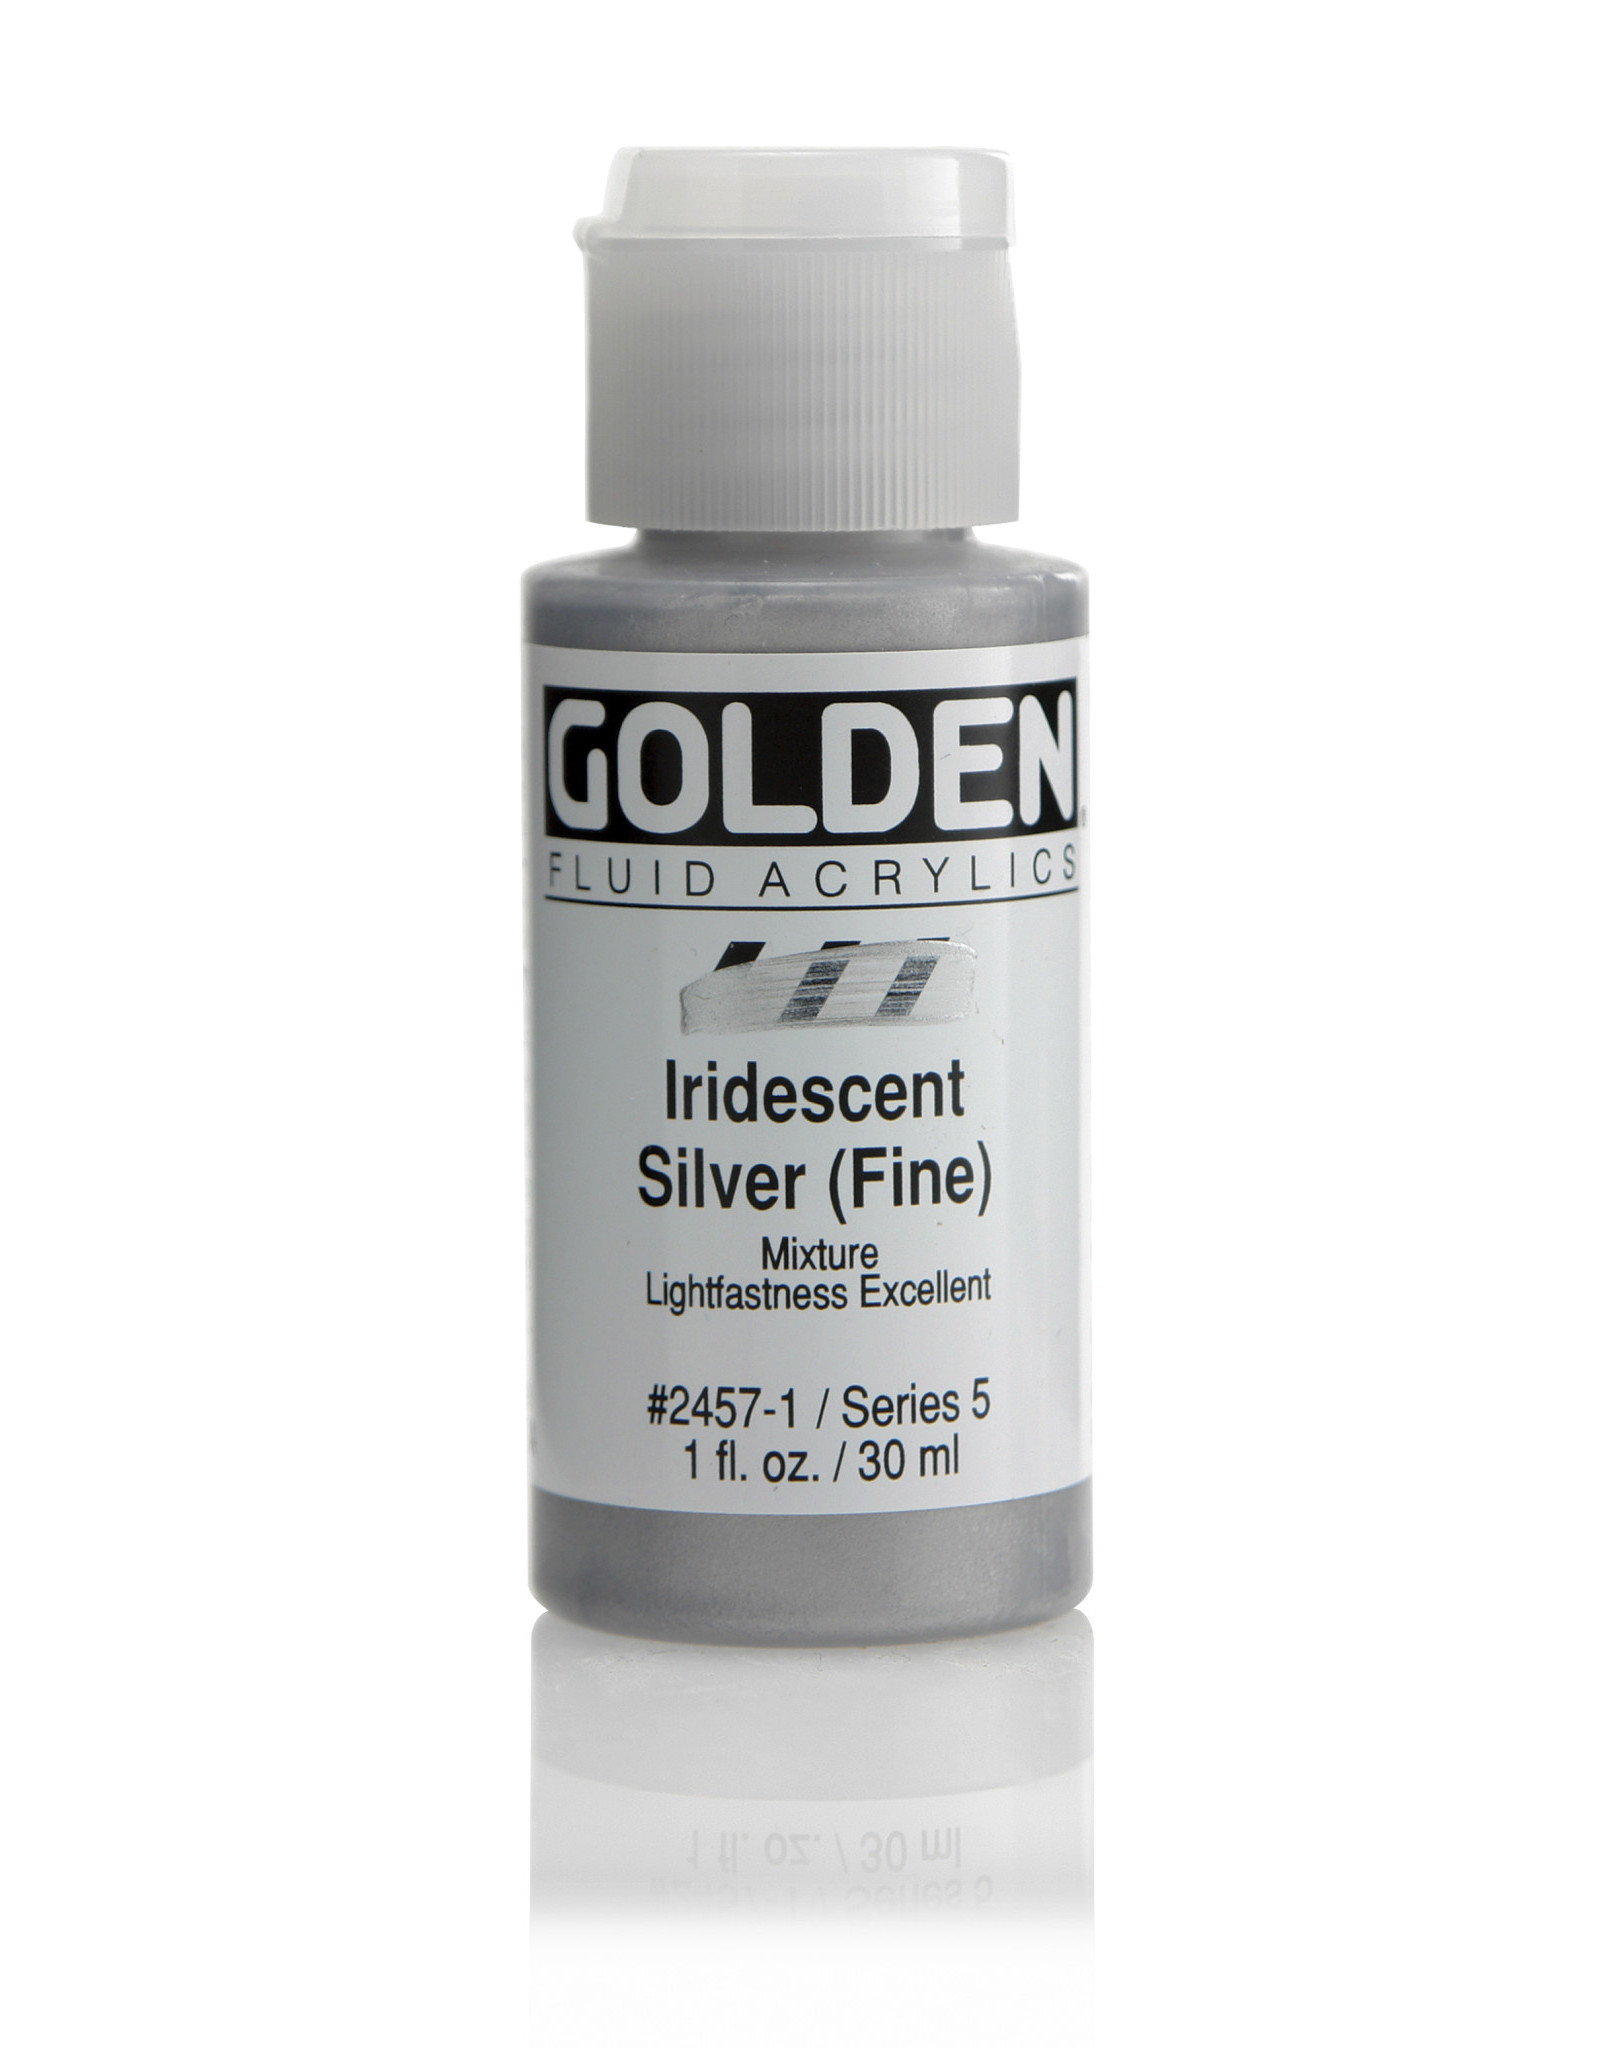 Golden Golden Fluid Acrylics, Iridescent Silver (Fine) 1oz Cylinder